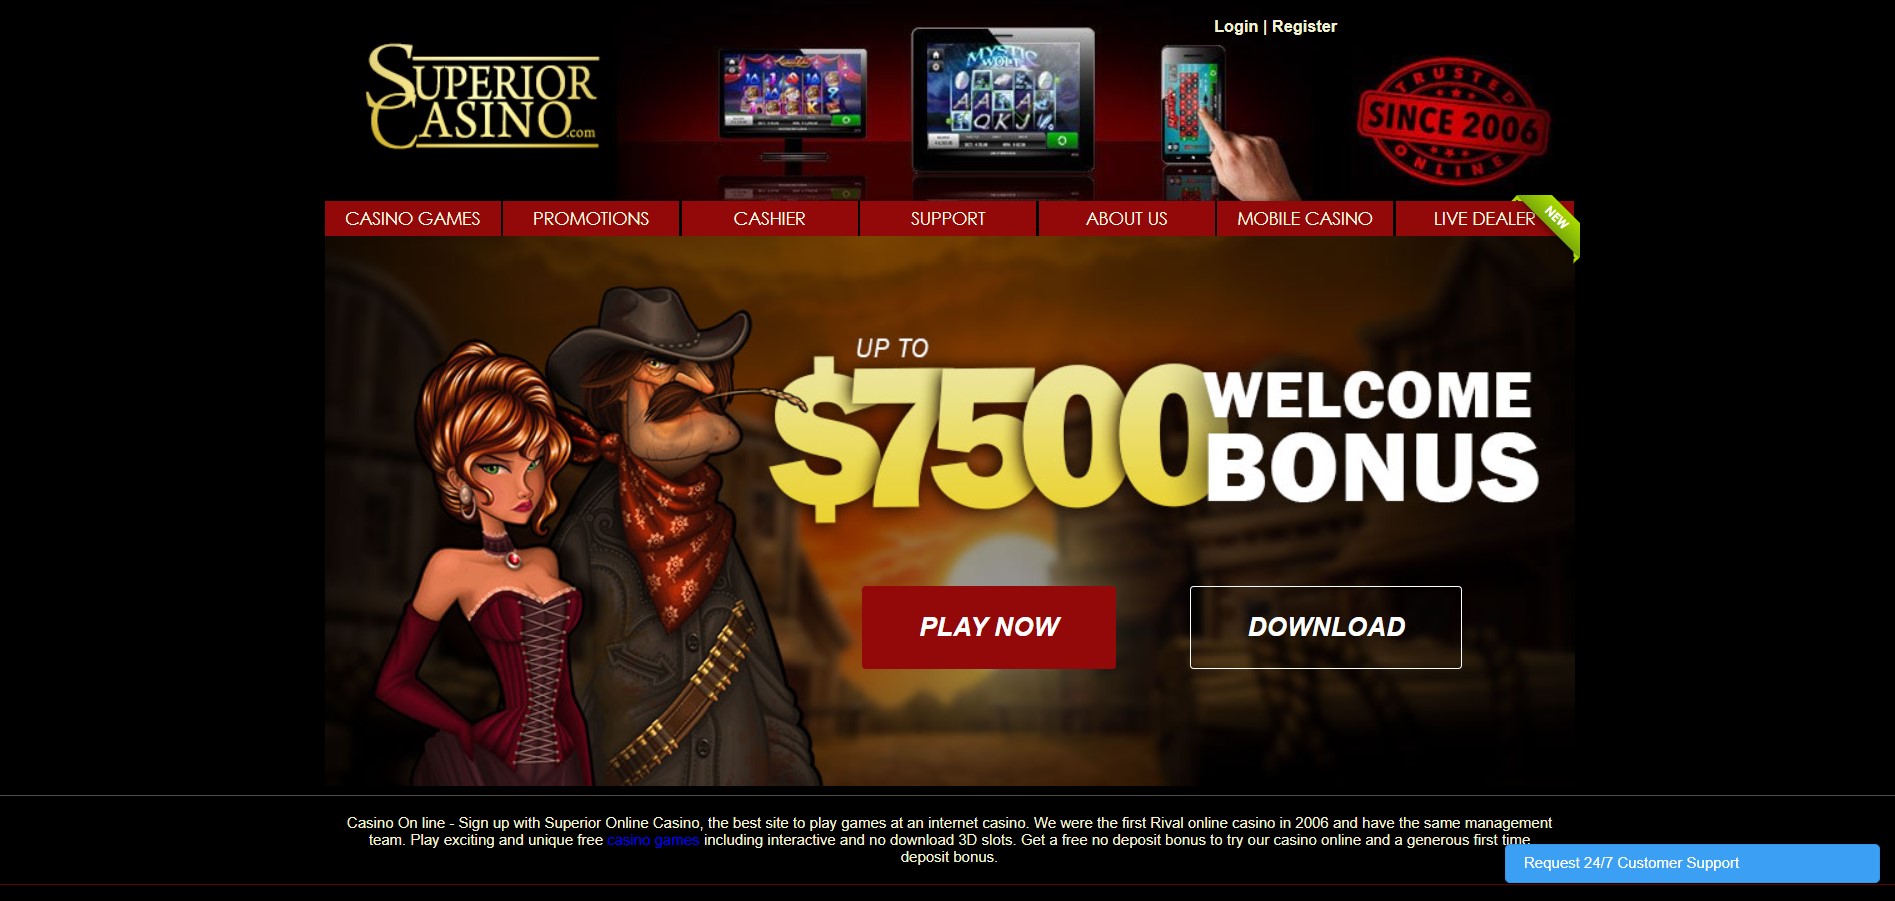 Superior online casino review